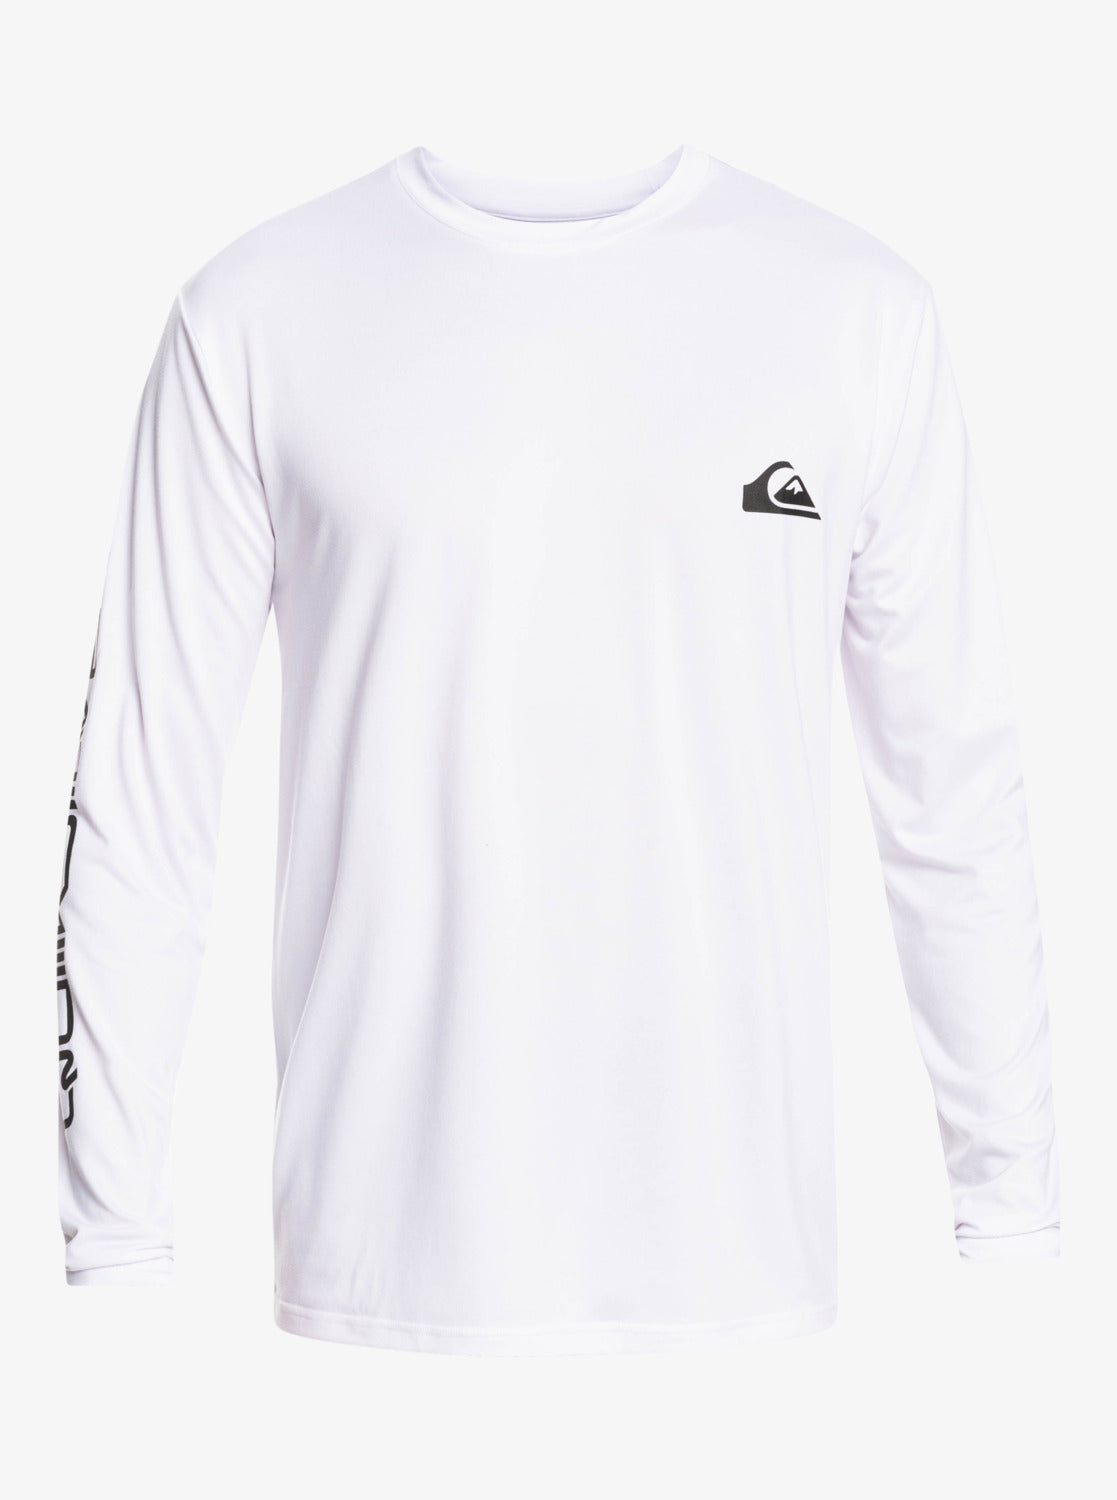 Omni Session Long Sleeve Upf 50 Surf T-Shirt - White